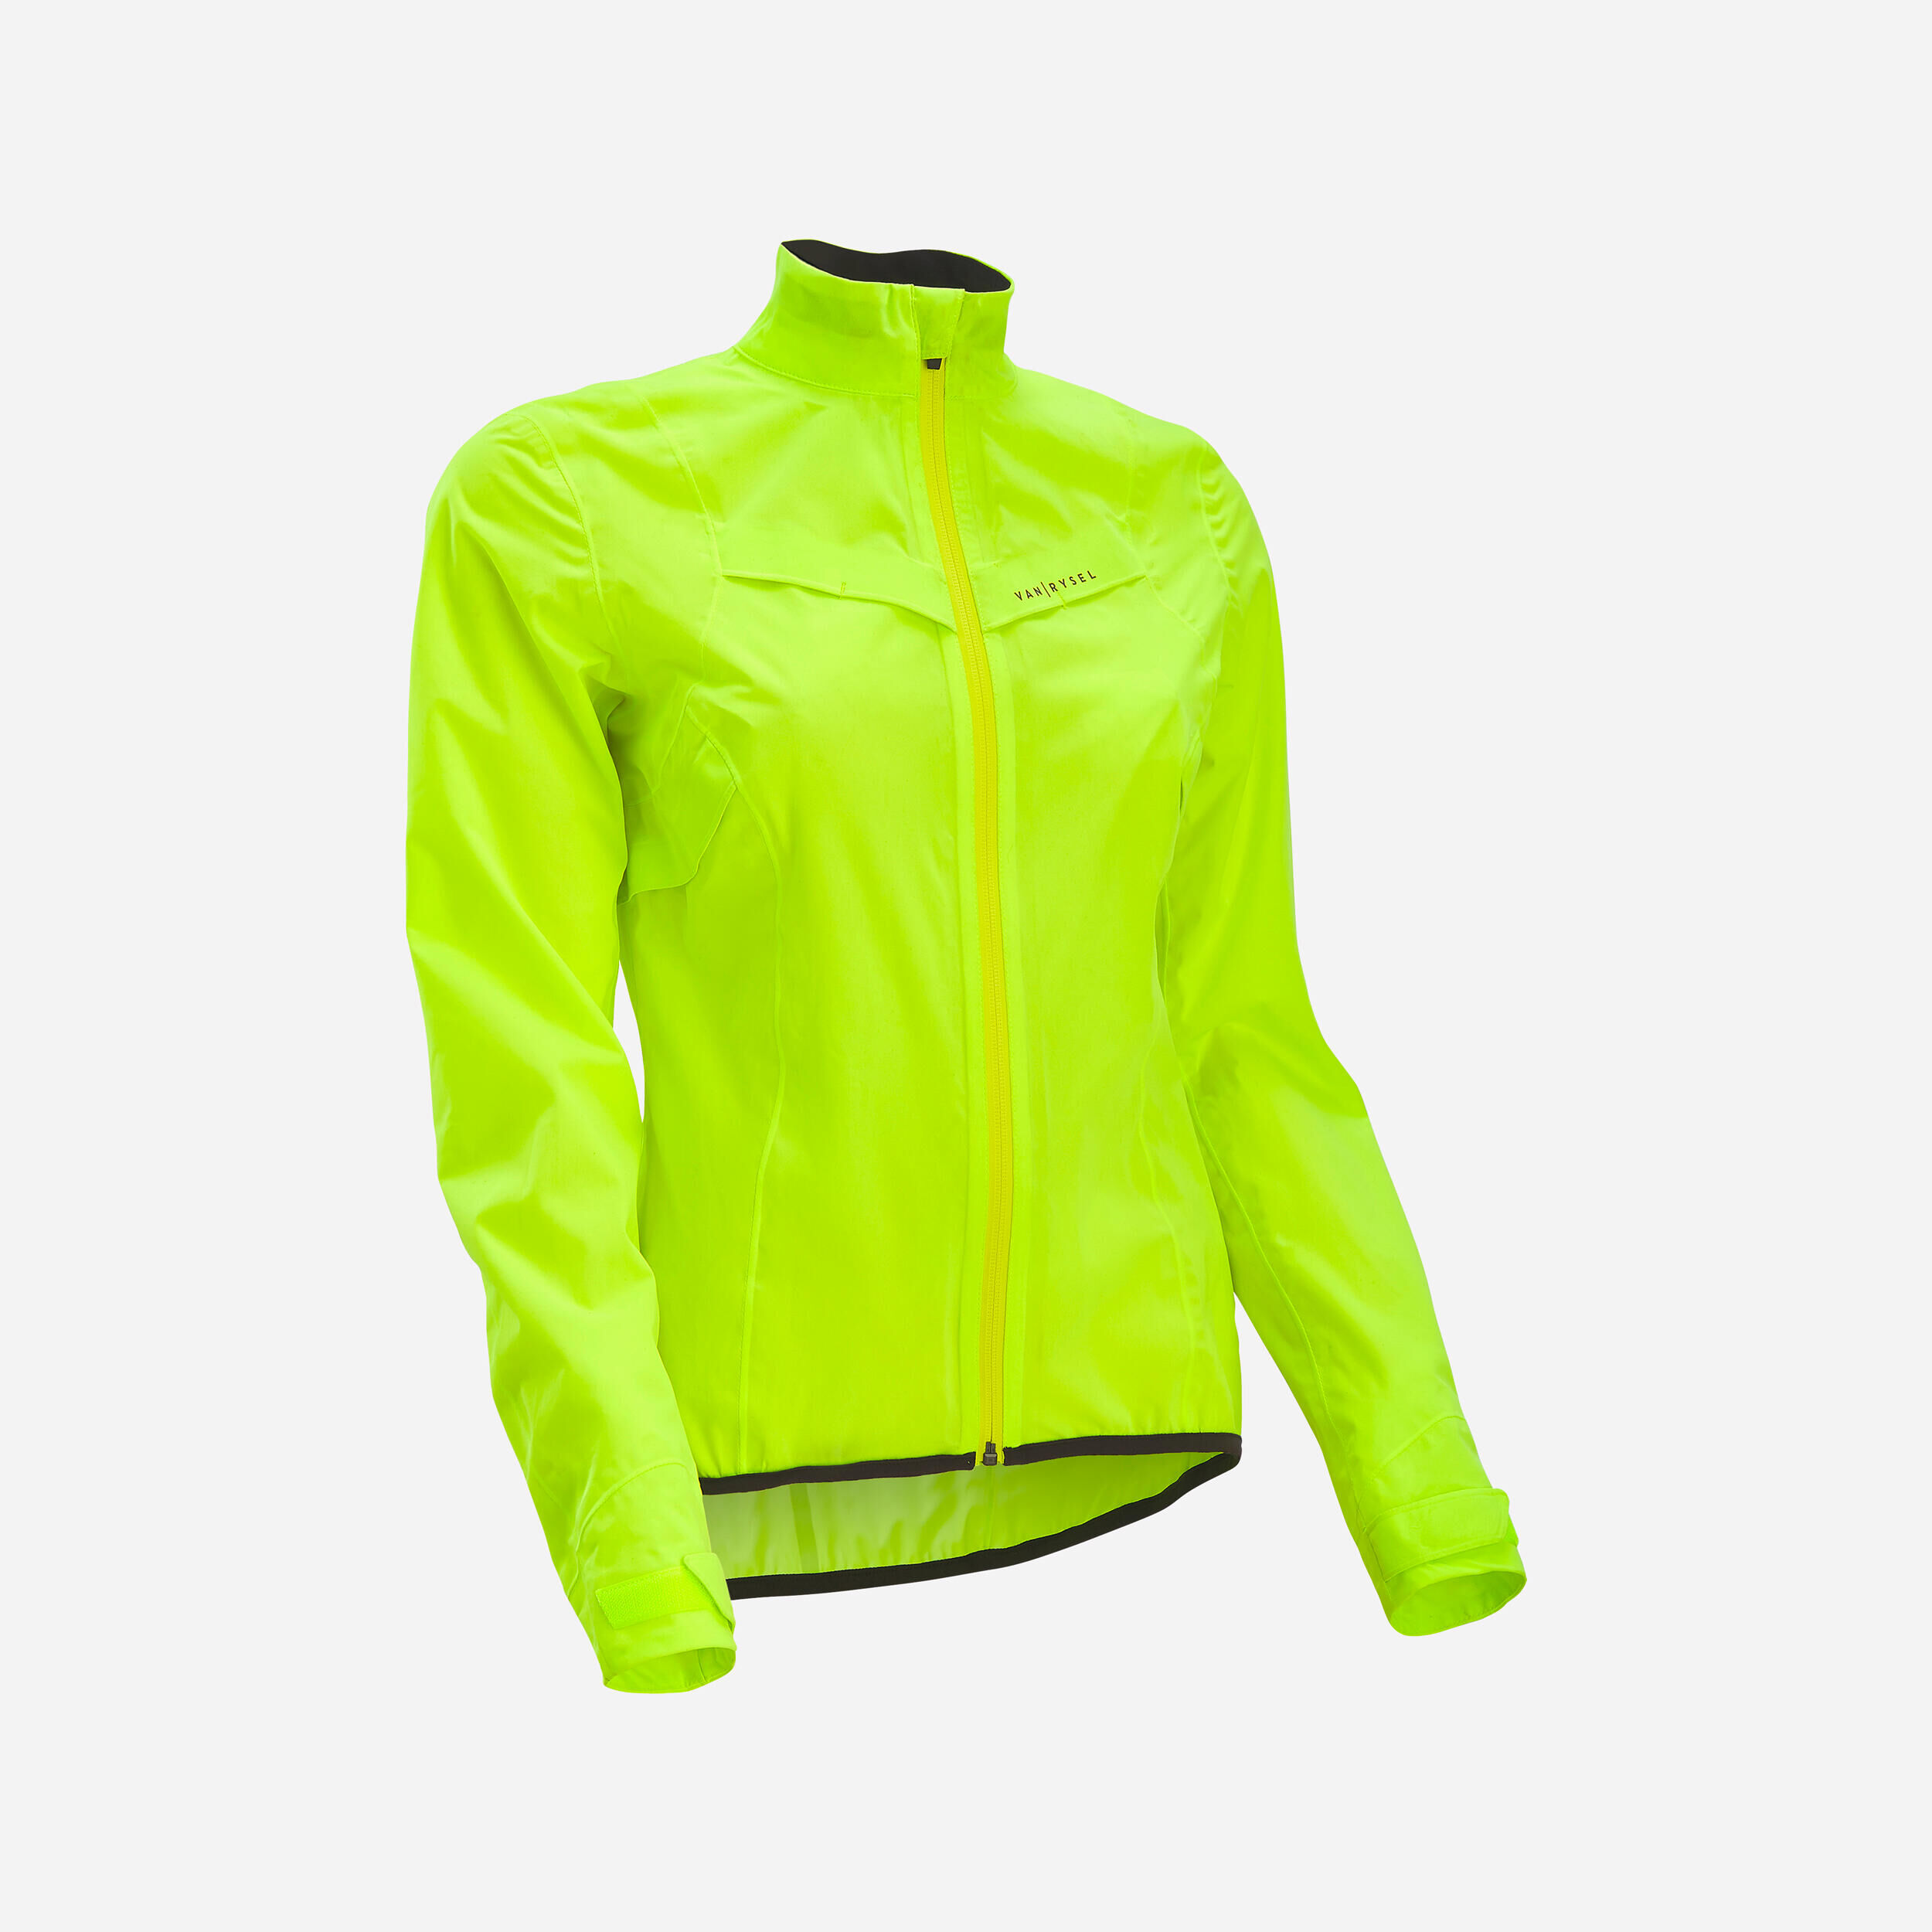 VAN RYSEL Women's Rainproof Jacket Racer - Yellow